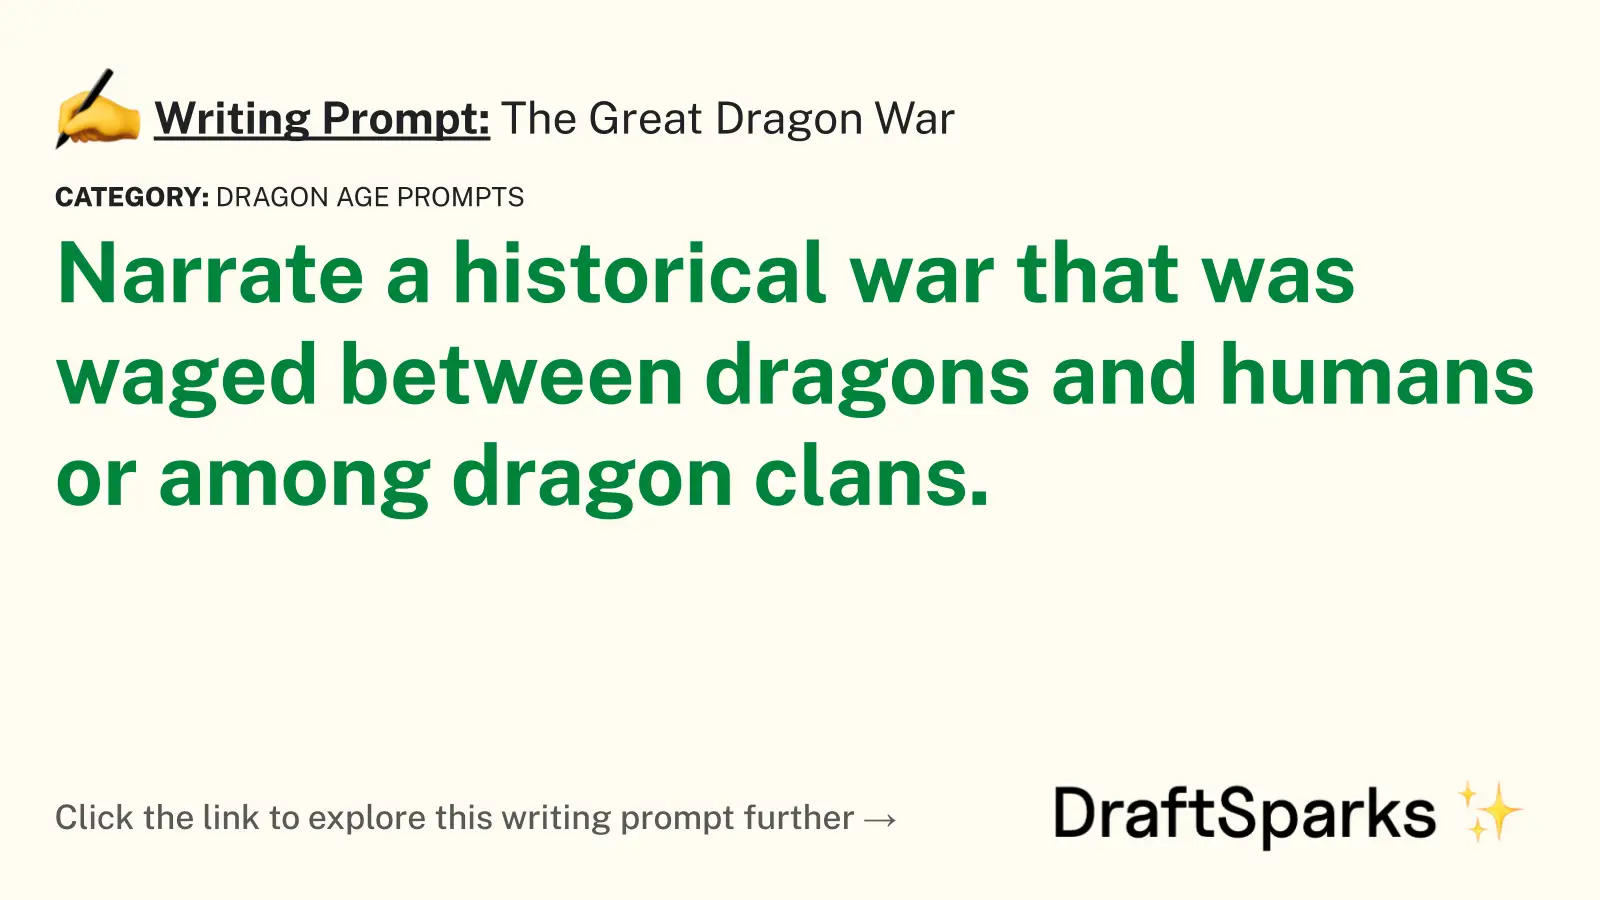 The Great Dragon War